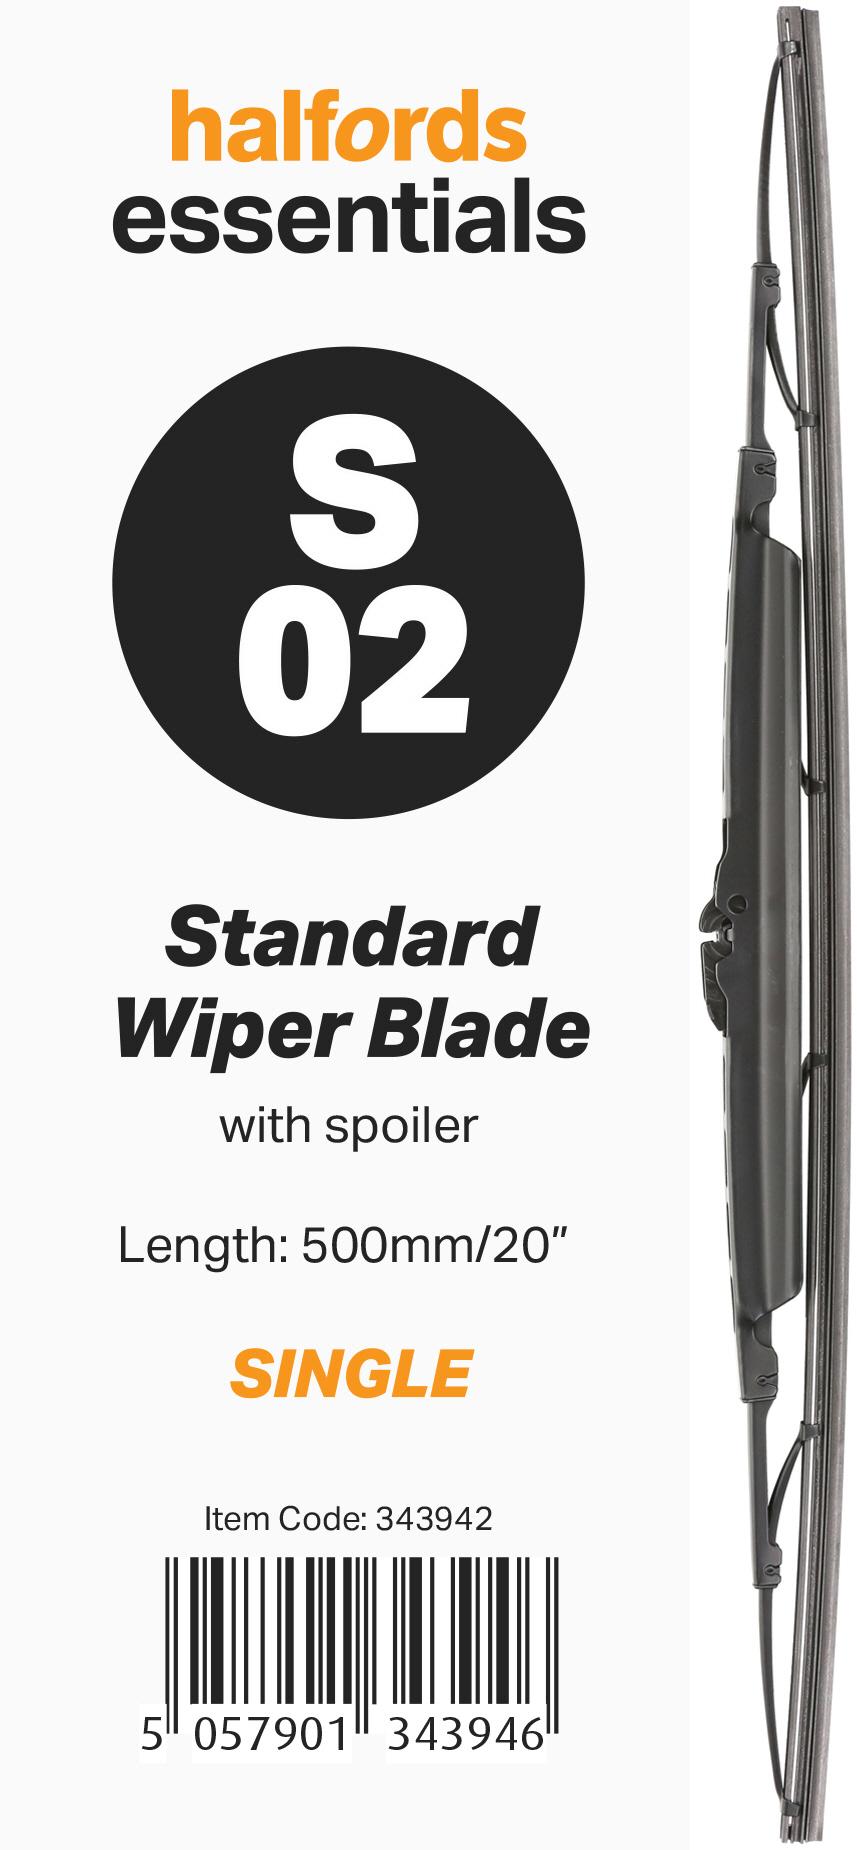 Halfords Essentials Spoiler Wiper Blade S02 - 20 Inch